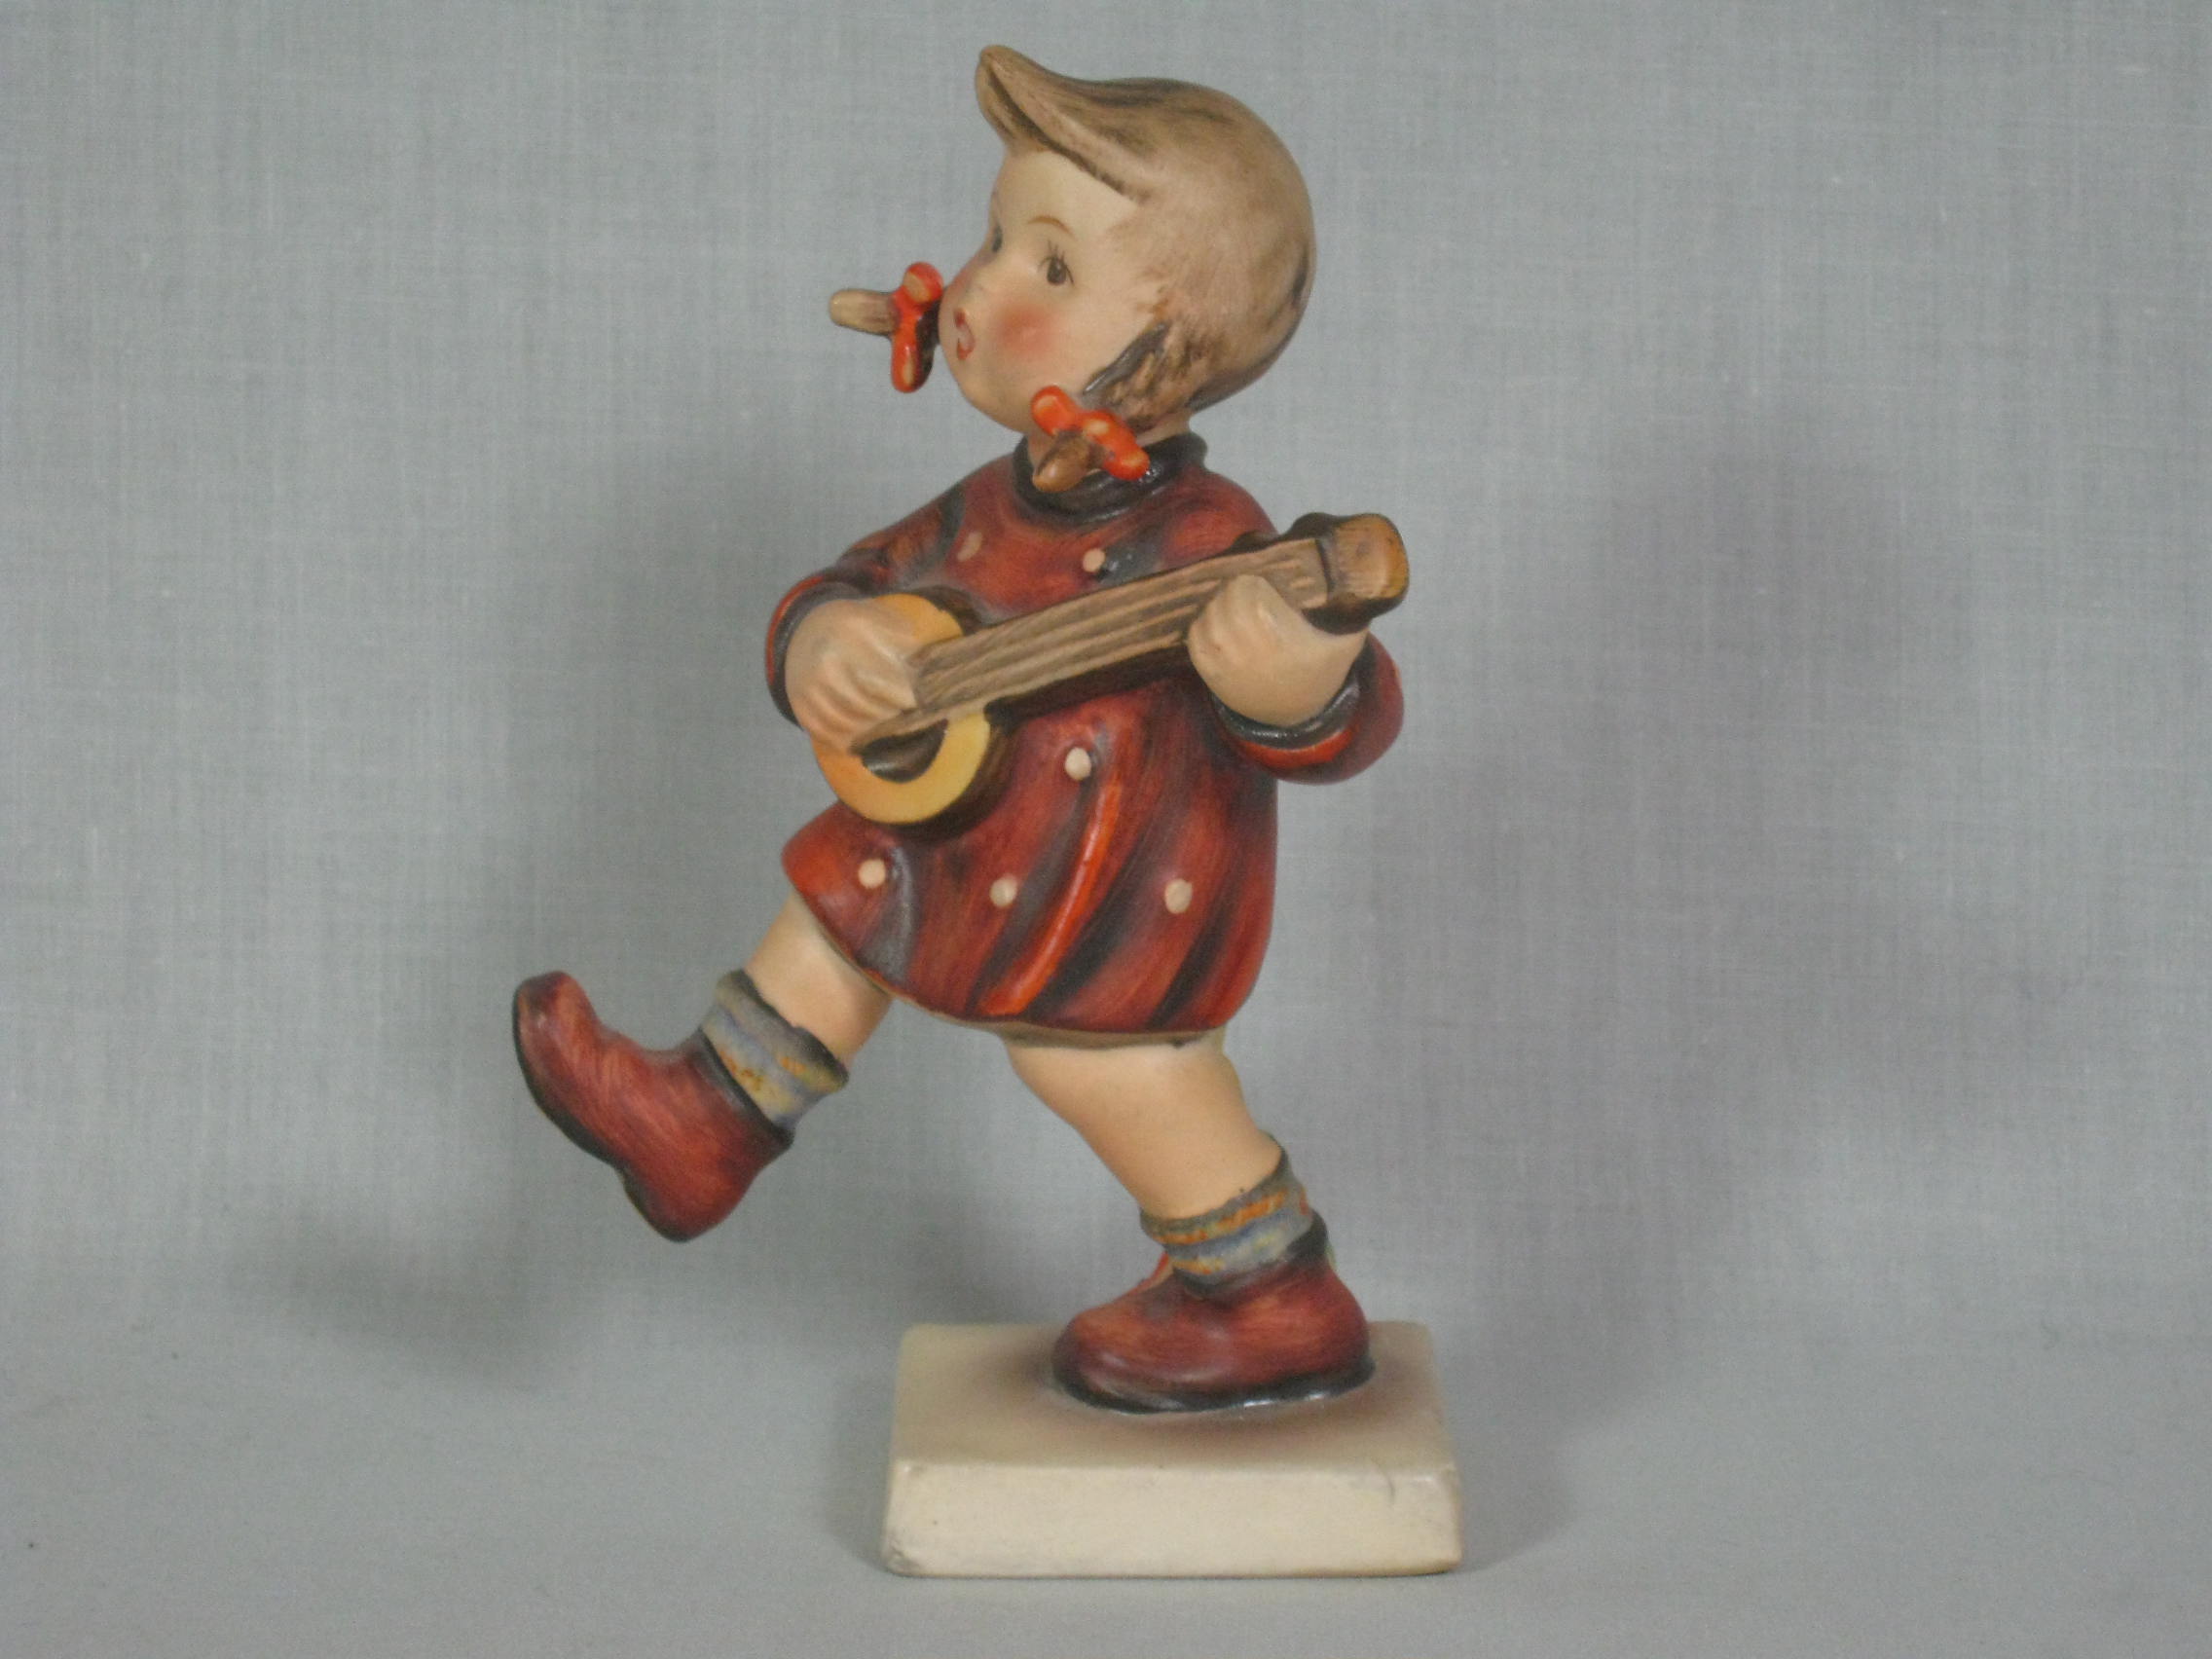 Vintage Hummel Figurine Happiness 86 TMK-2 Girl With Banjo Full Bee Mark Germany 2